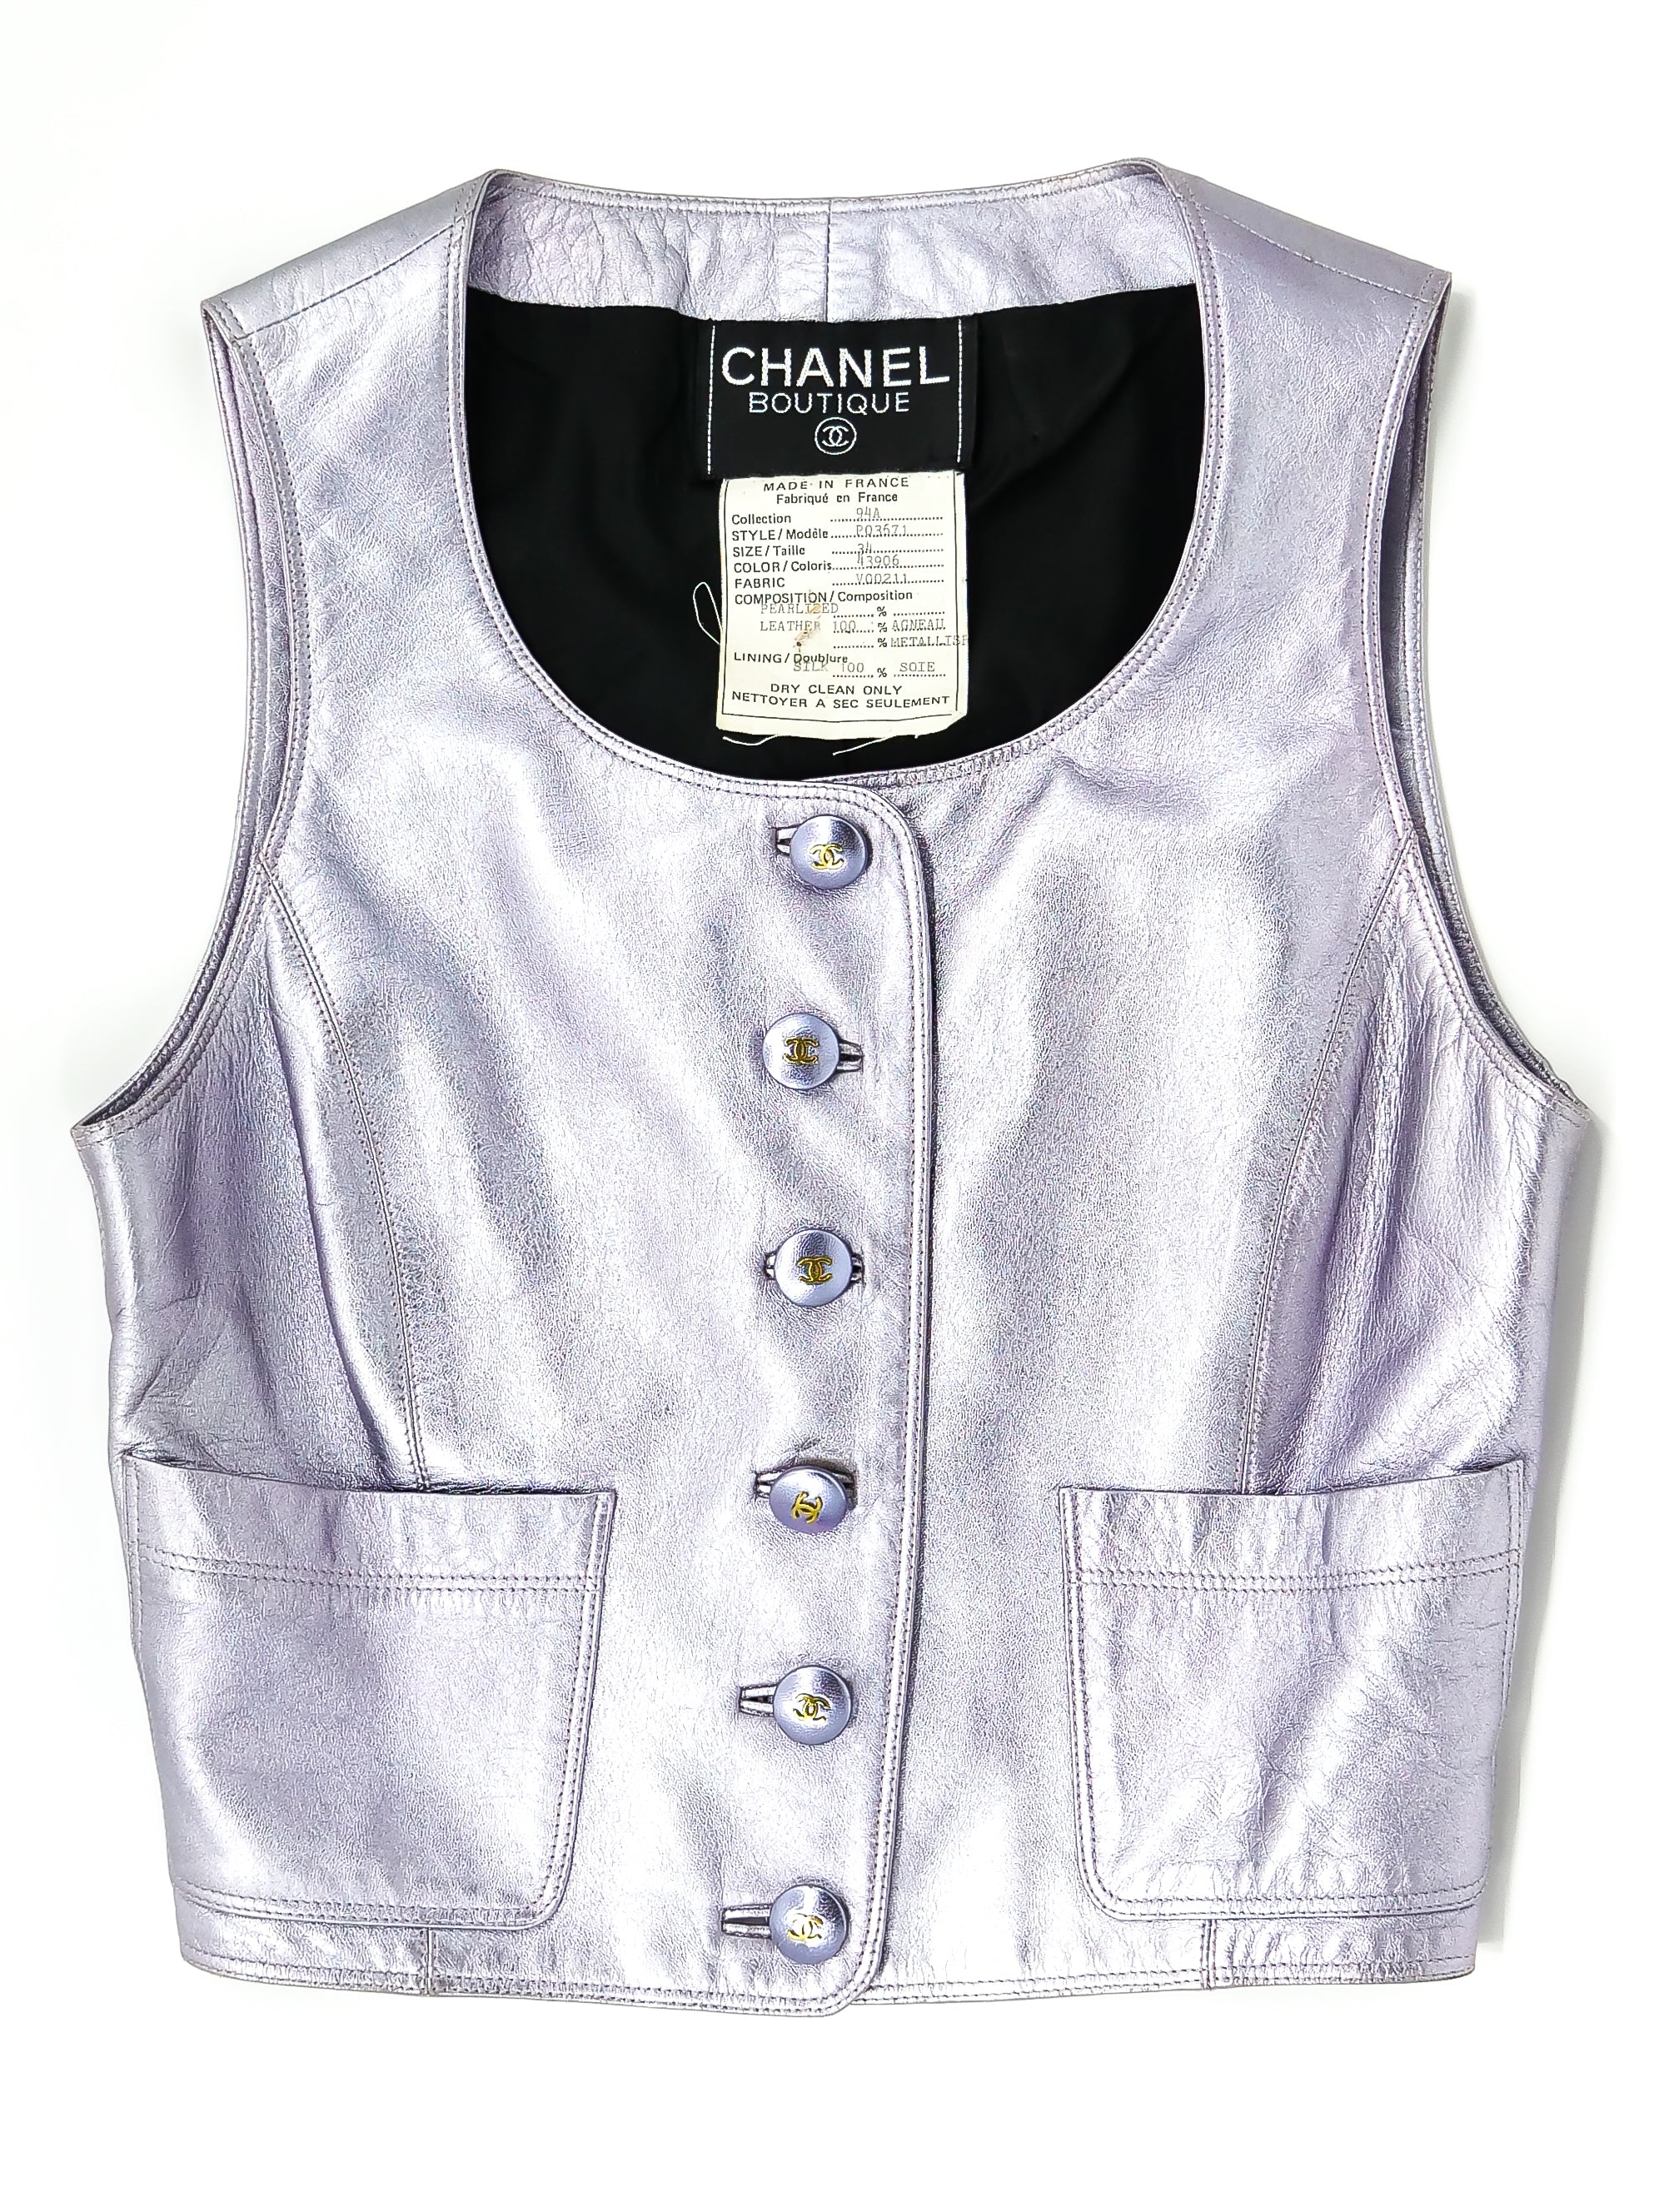 CHANEL black and white cotton BOUCLE Sleeveless Dress 36 XS